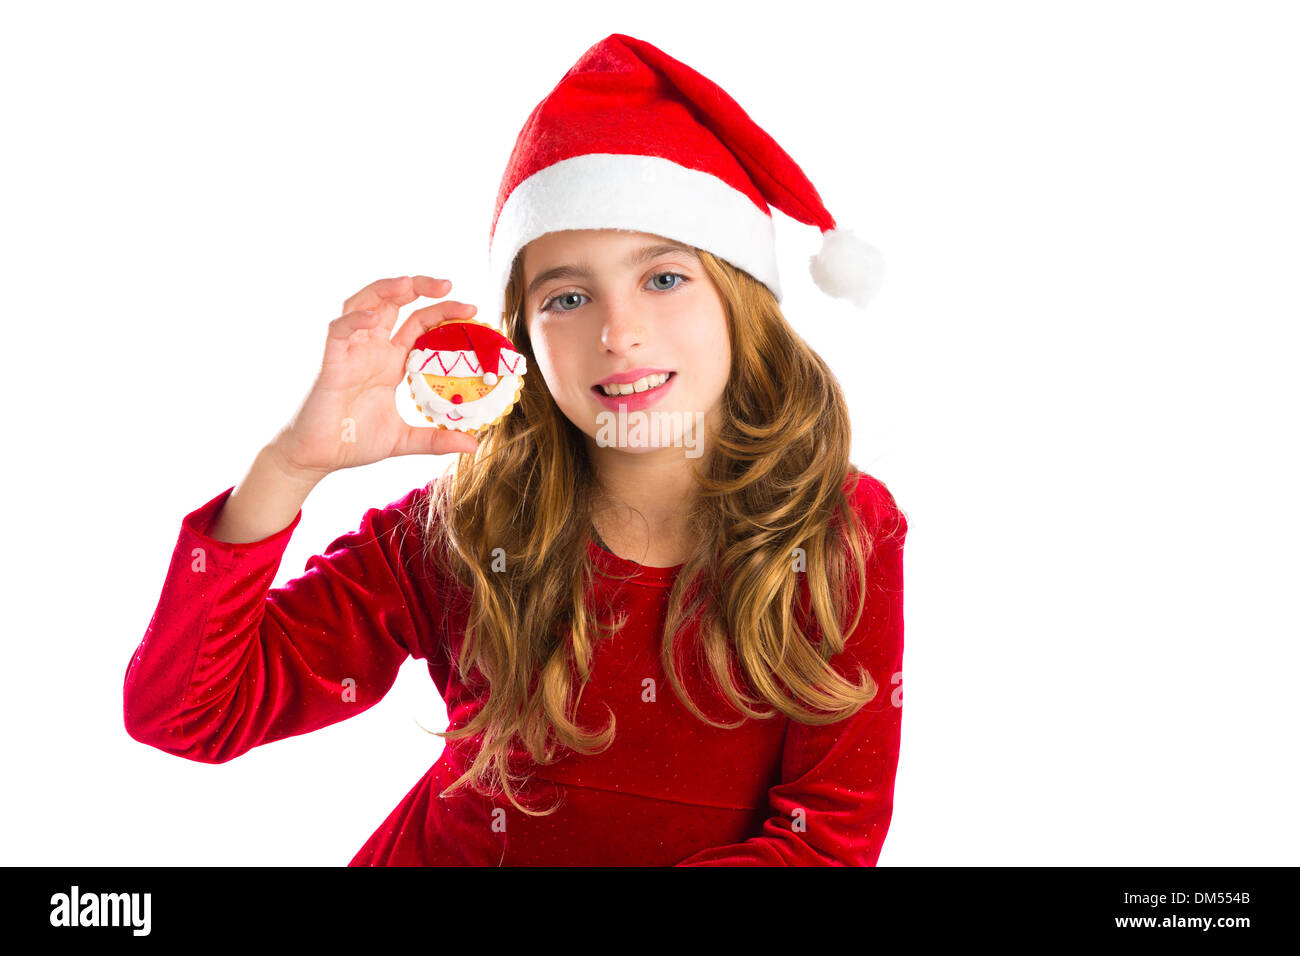 Christmas Santa cookie and Xmas dress kid girl isolated on white background Stock Photo